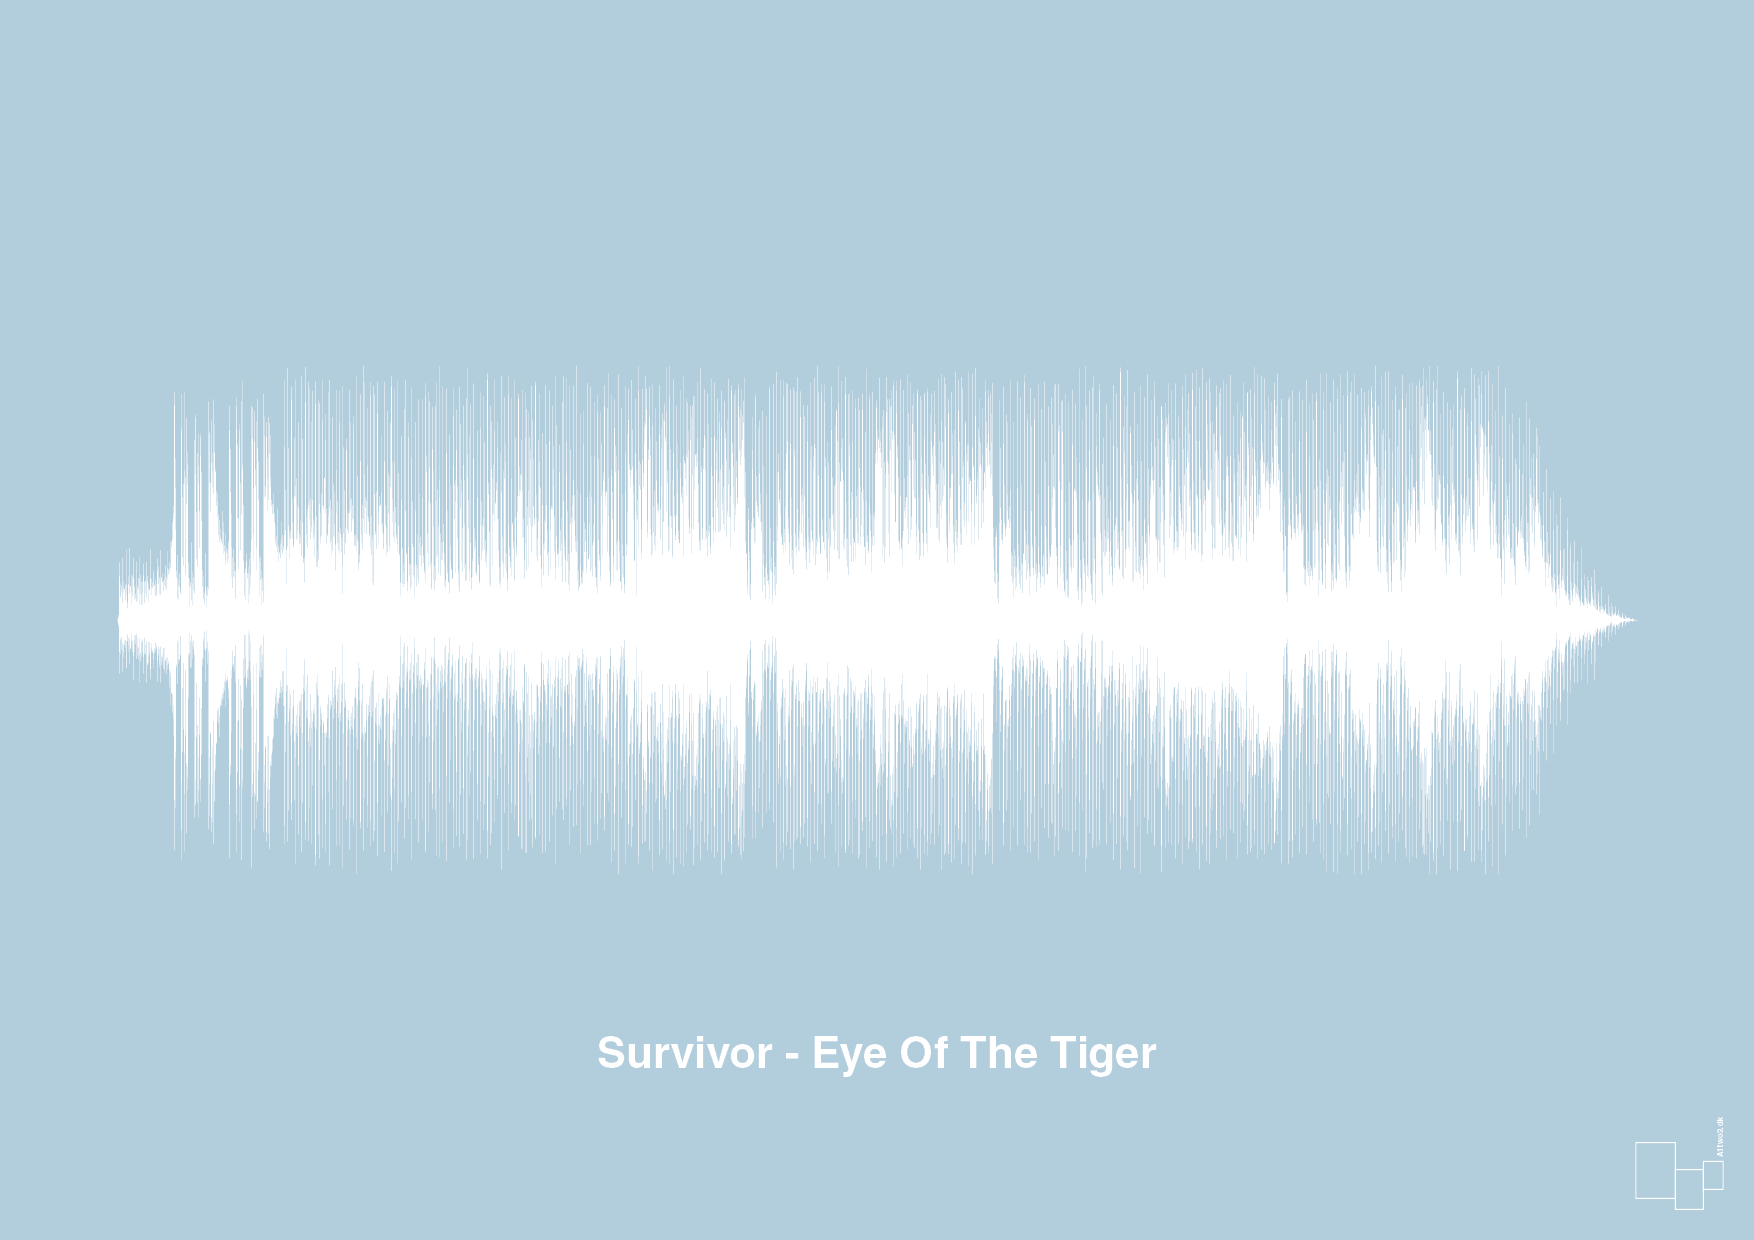 survivor - eye of the tiger - Plakat med Musik i Heavenly Blue